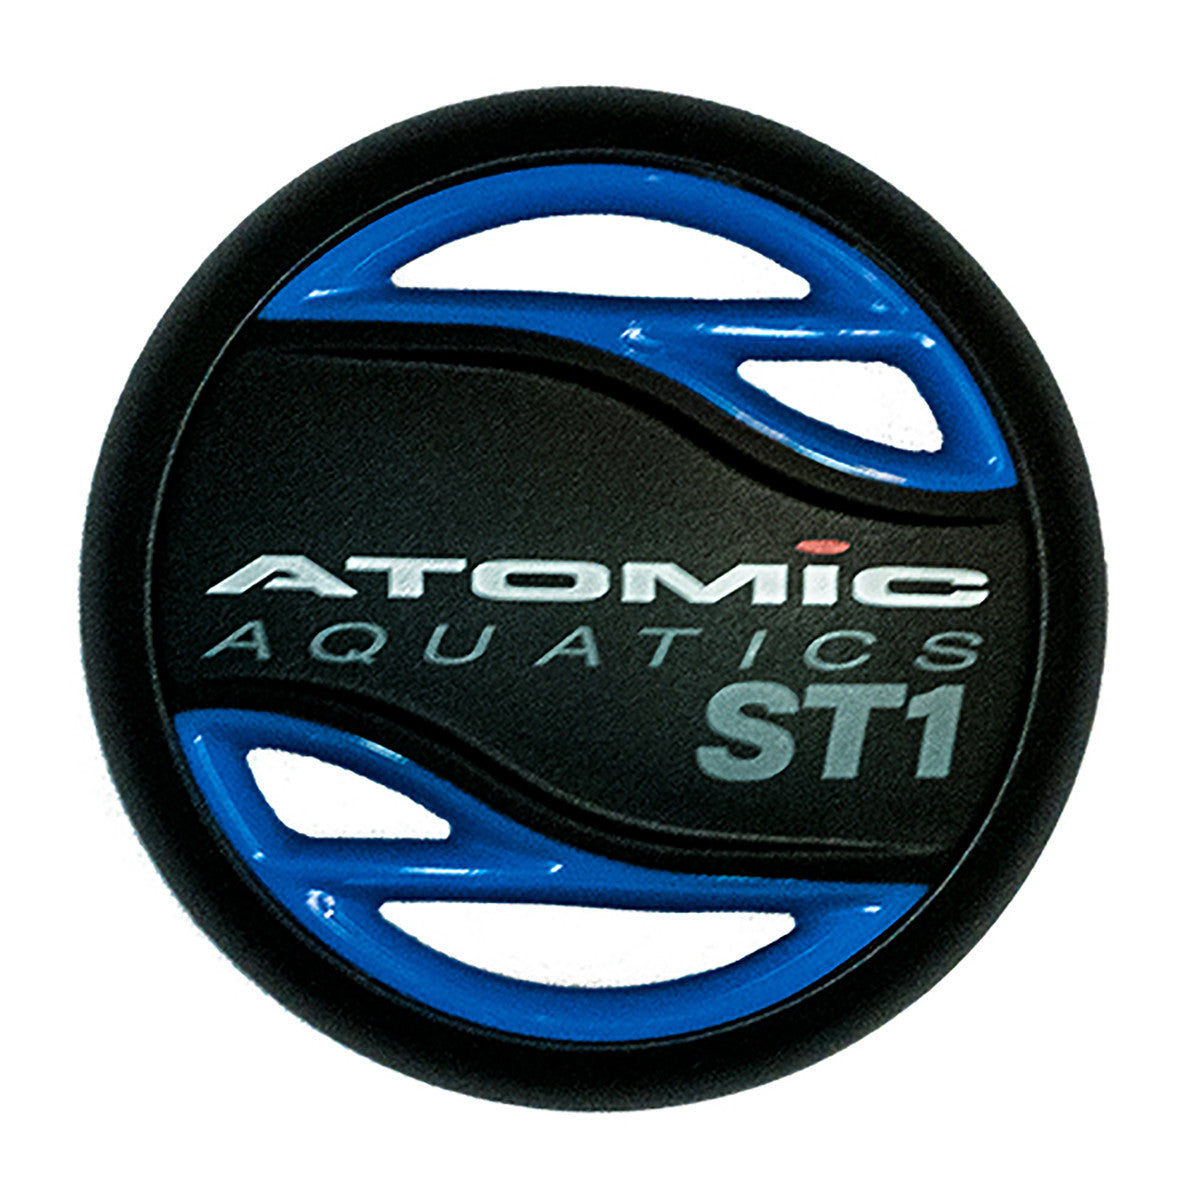 Atomic Aquatics ST1 Color Kit